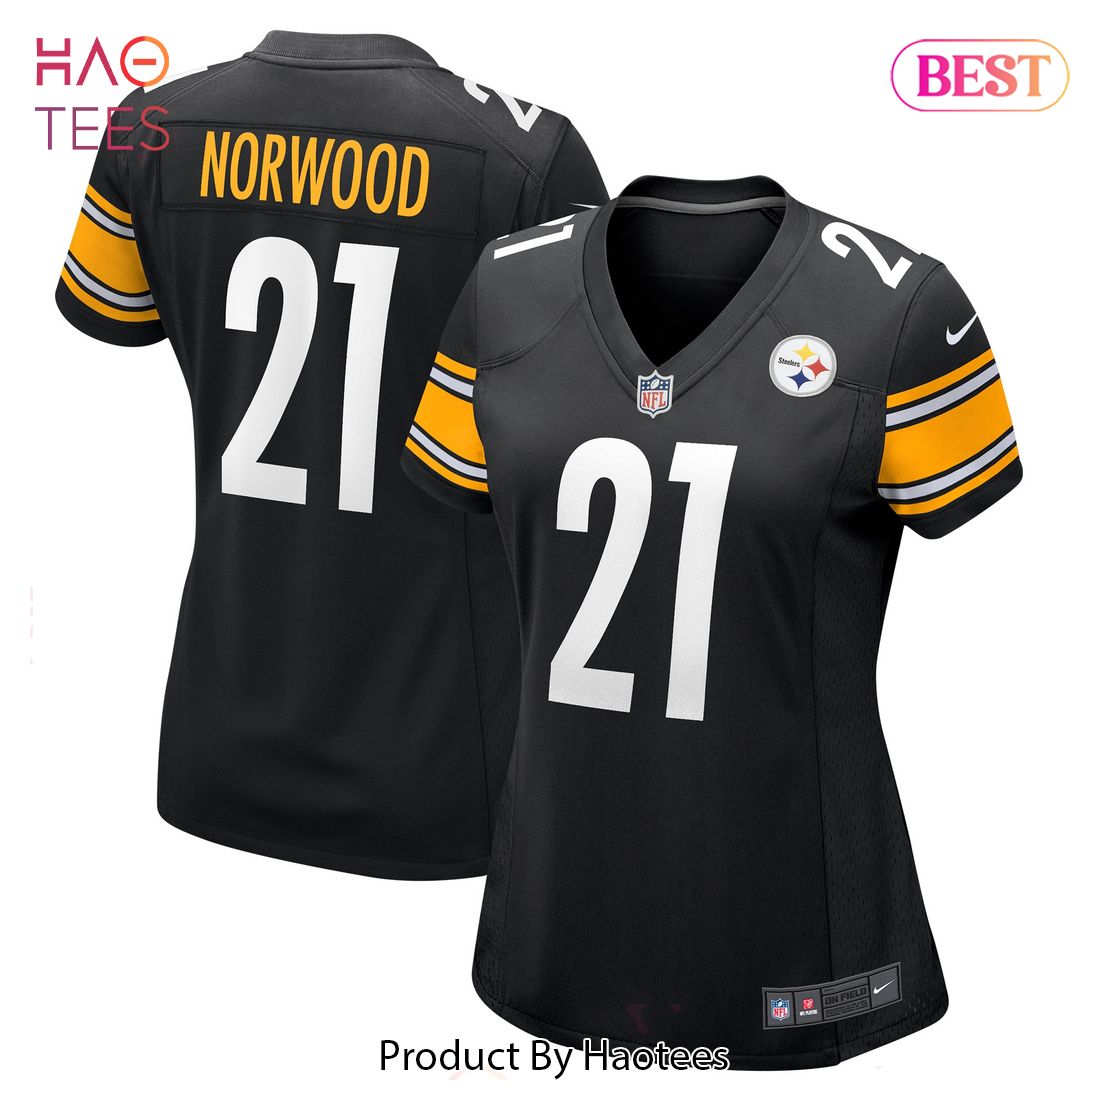 Tre Norwood Pittsburgh Steelers Nike Women’s Game Jersey Black